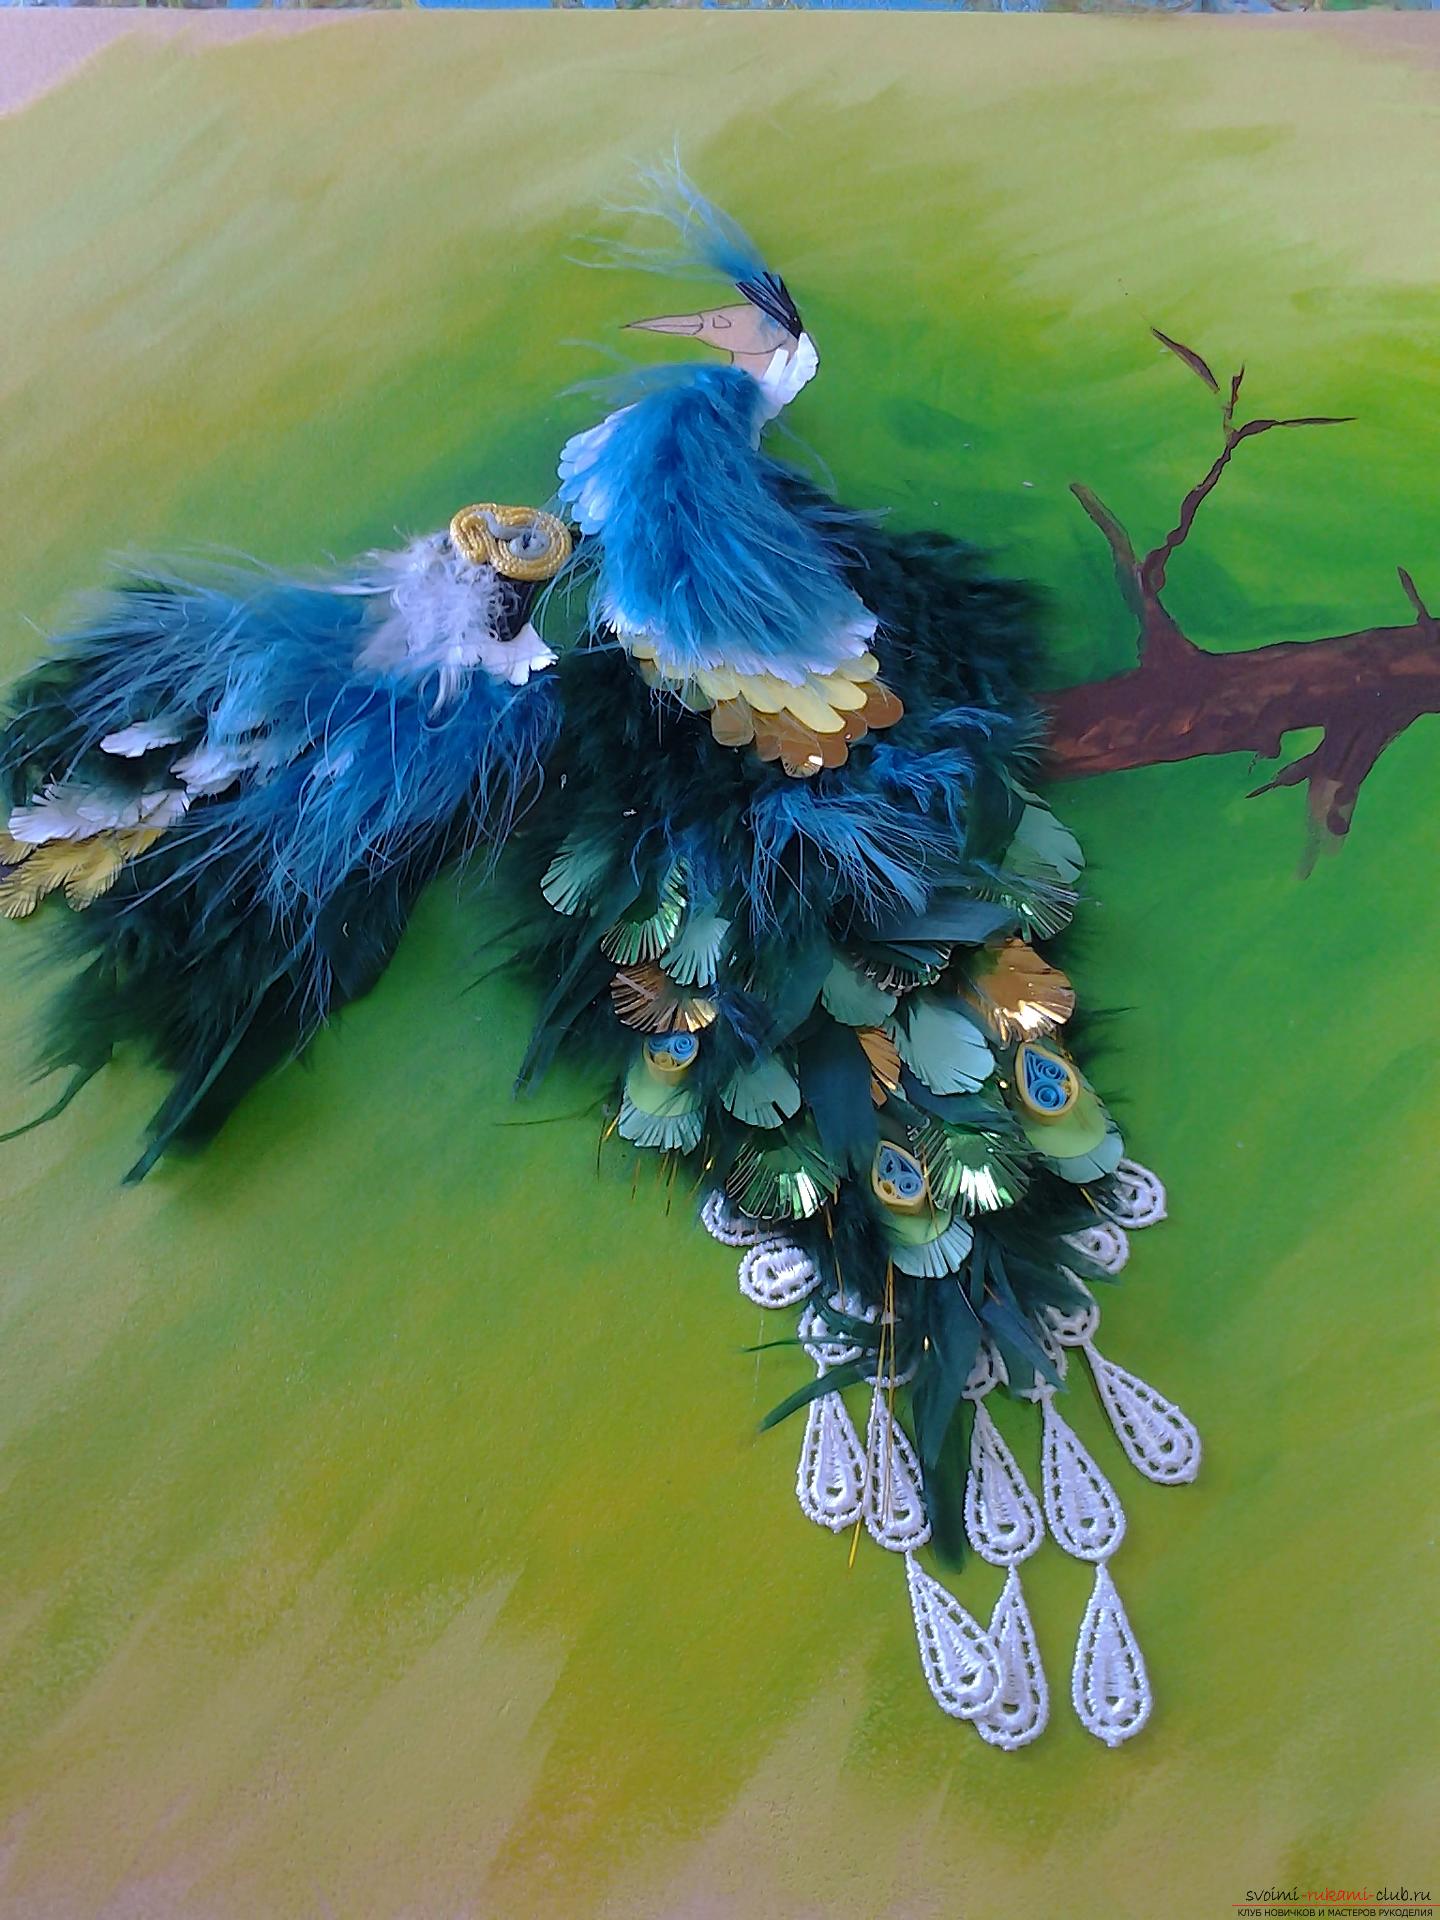 Original painting: birds on a branch. Photo №4